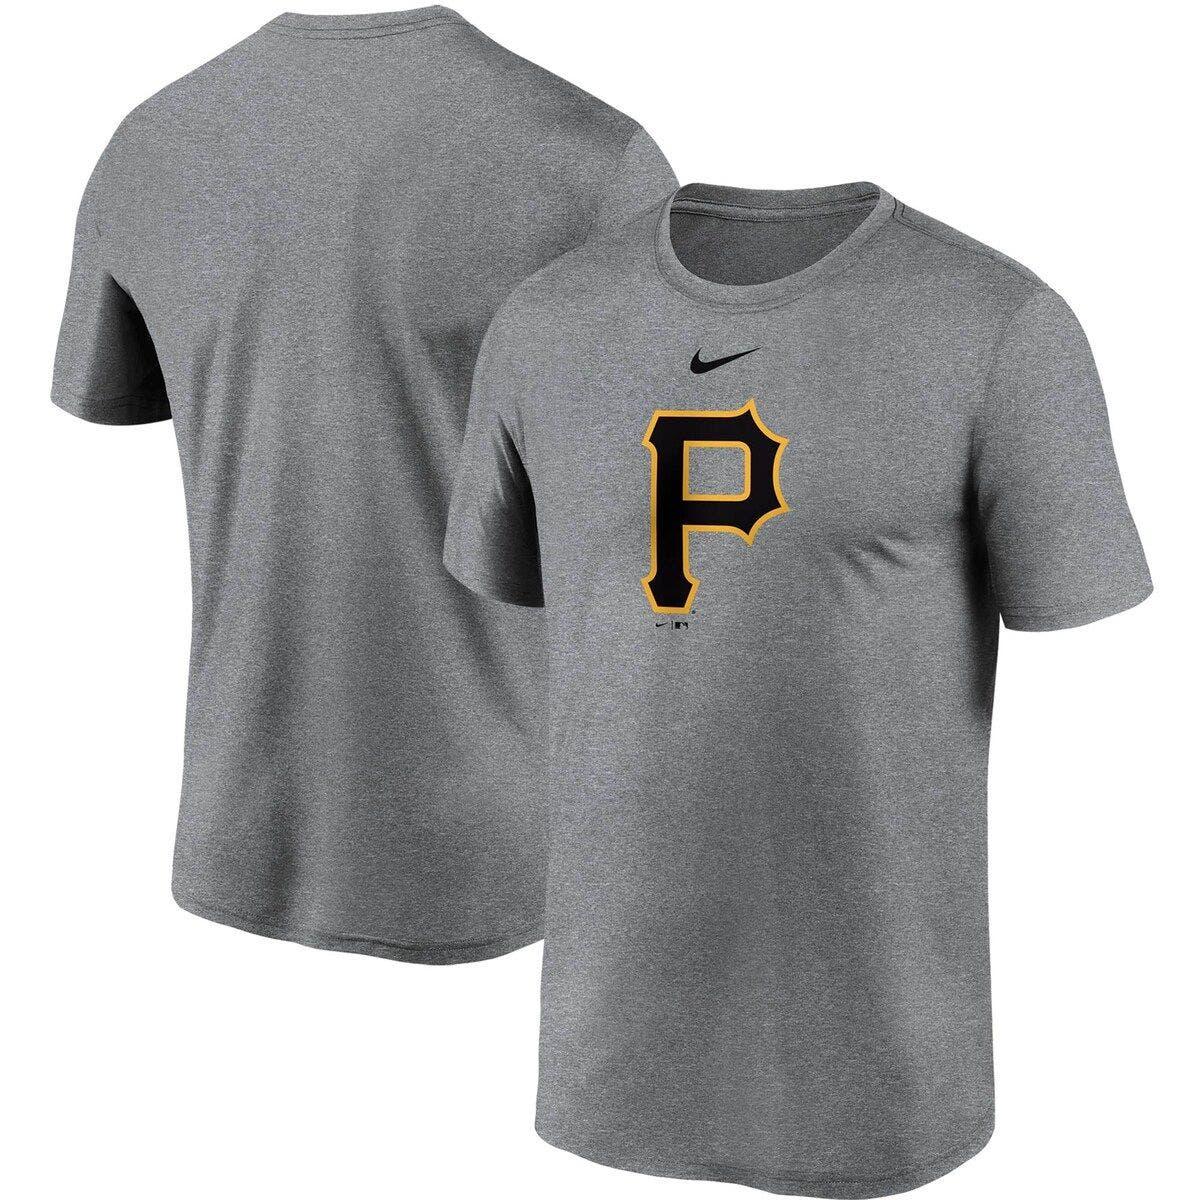 Pittsburgh Pirates Big & Tall Apparel, Pirates Big & Tall Clothing